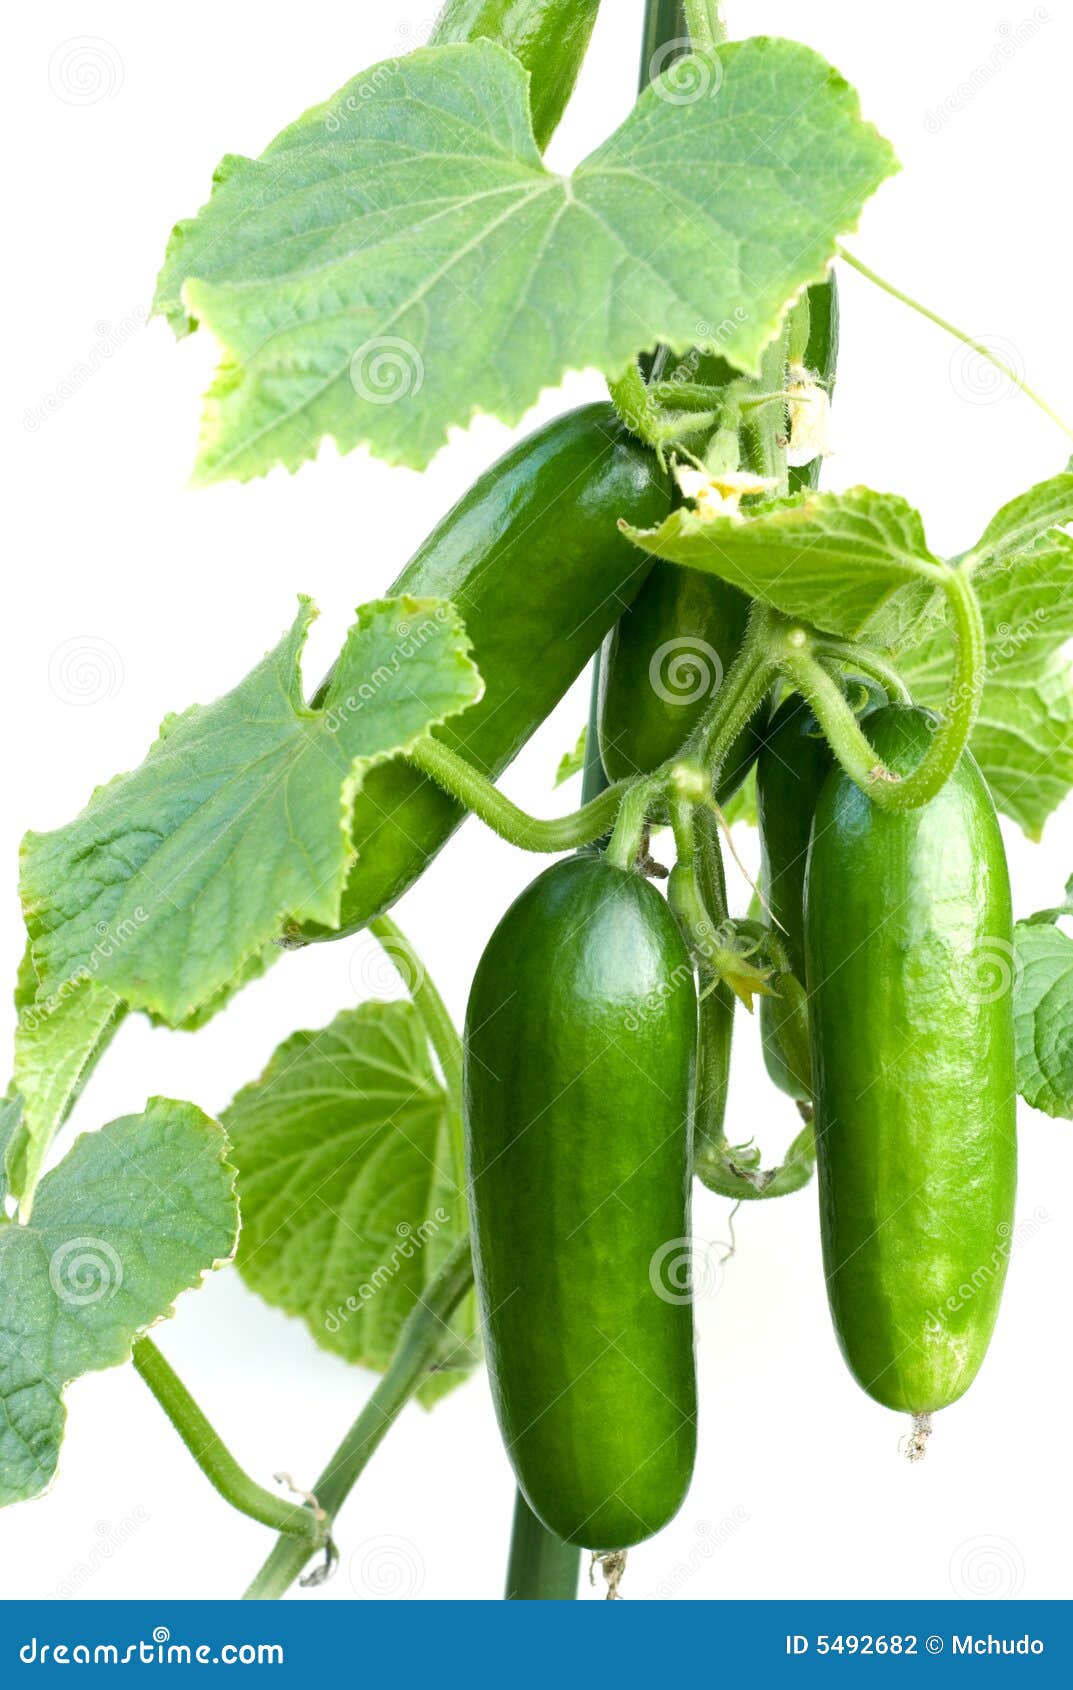 bullish cucumbers